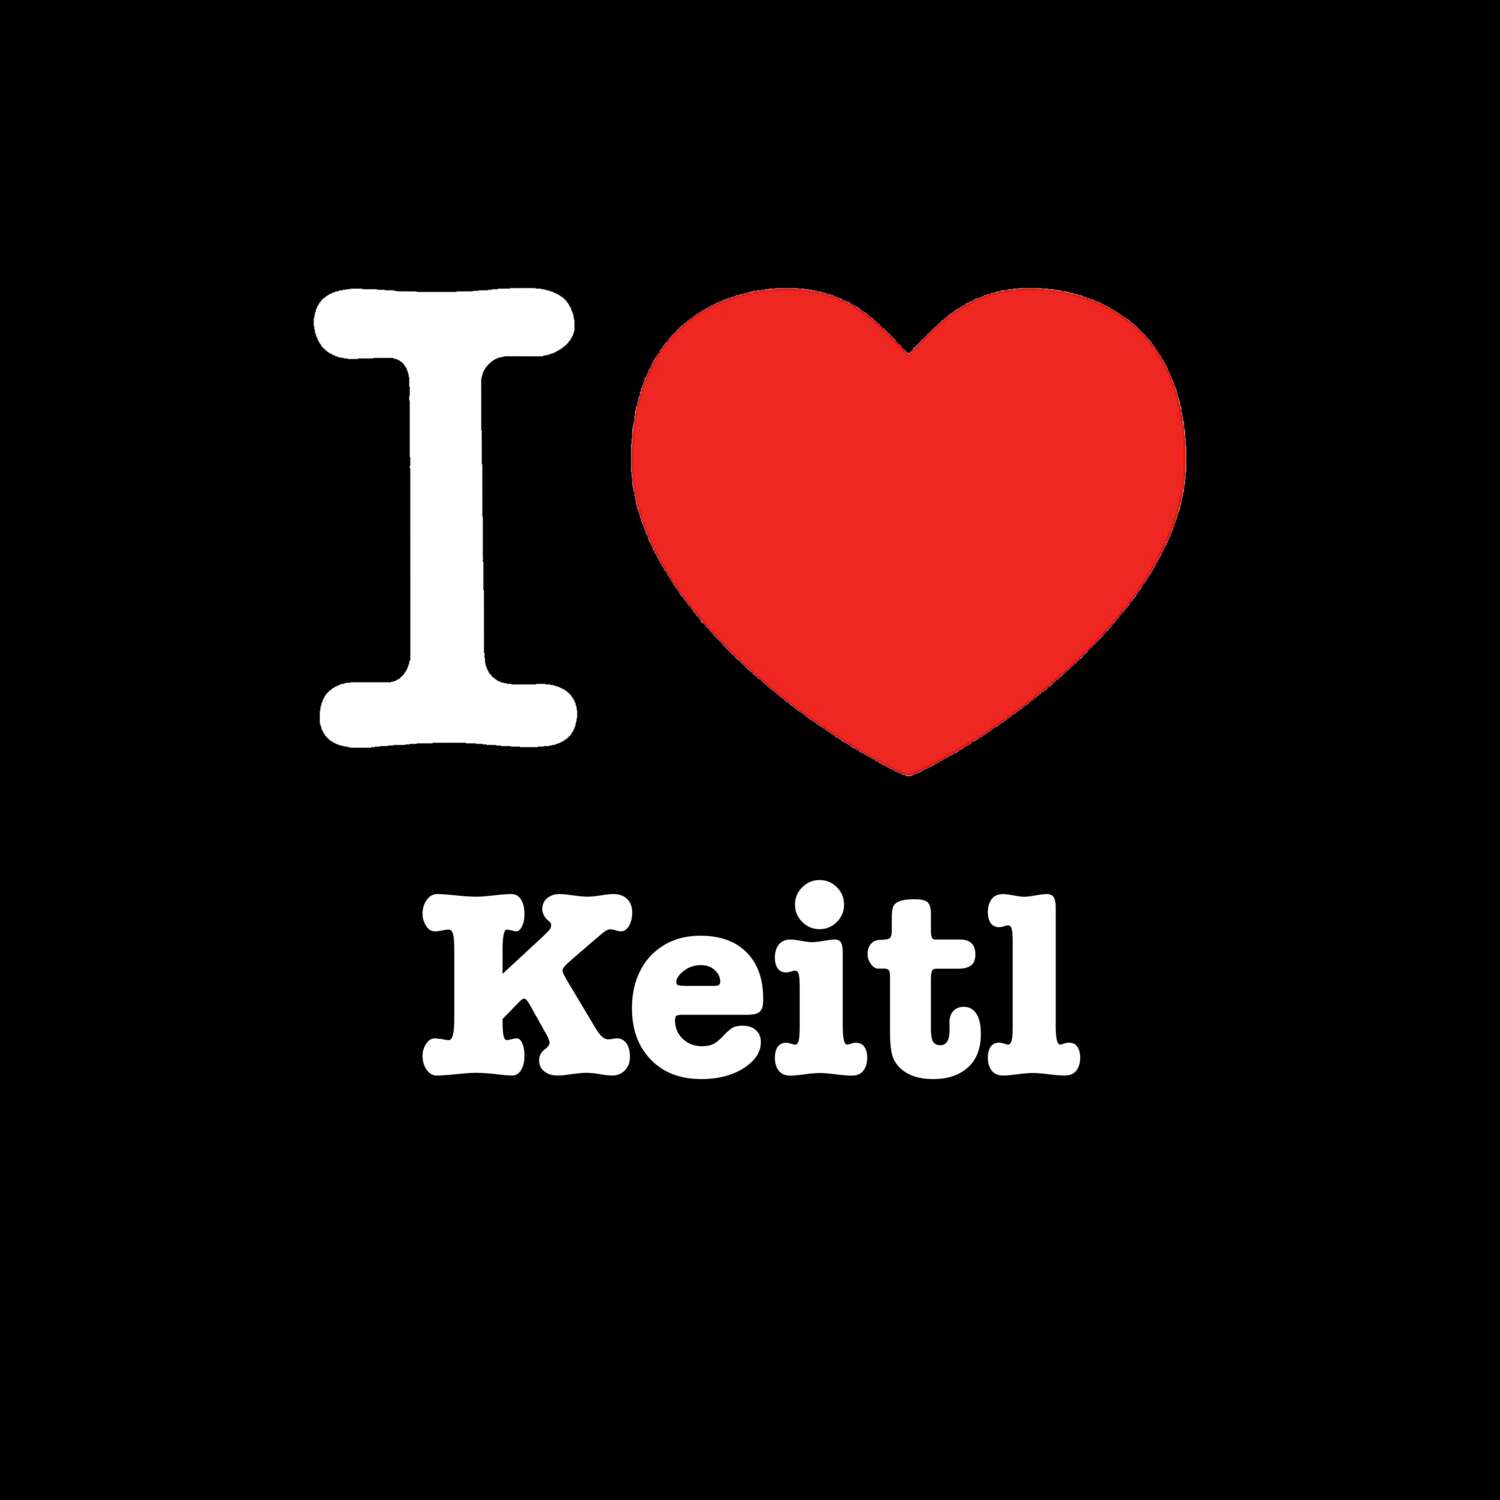 Keitl T-Shirt »I love«